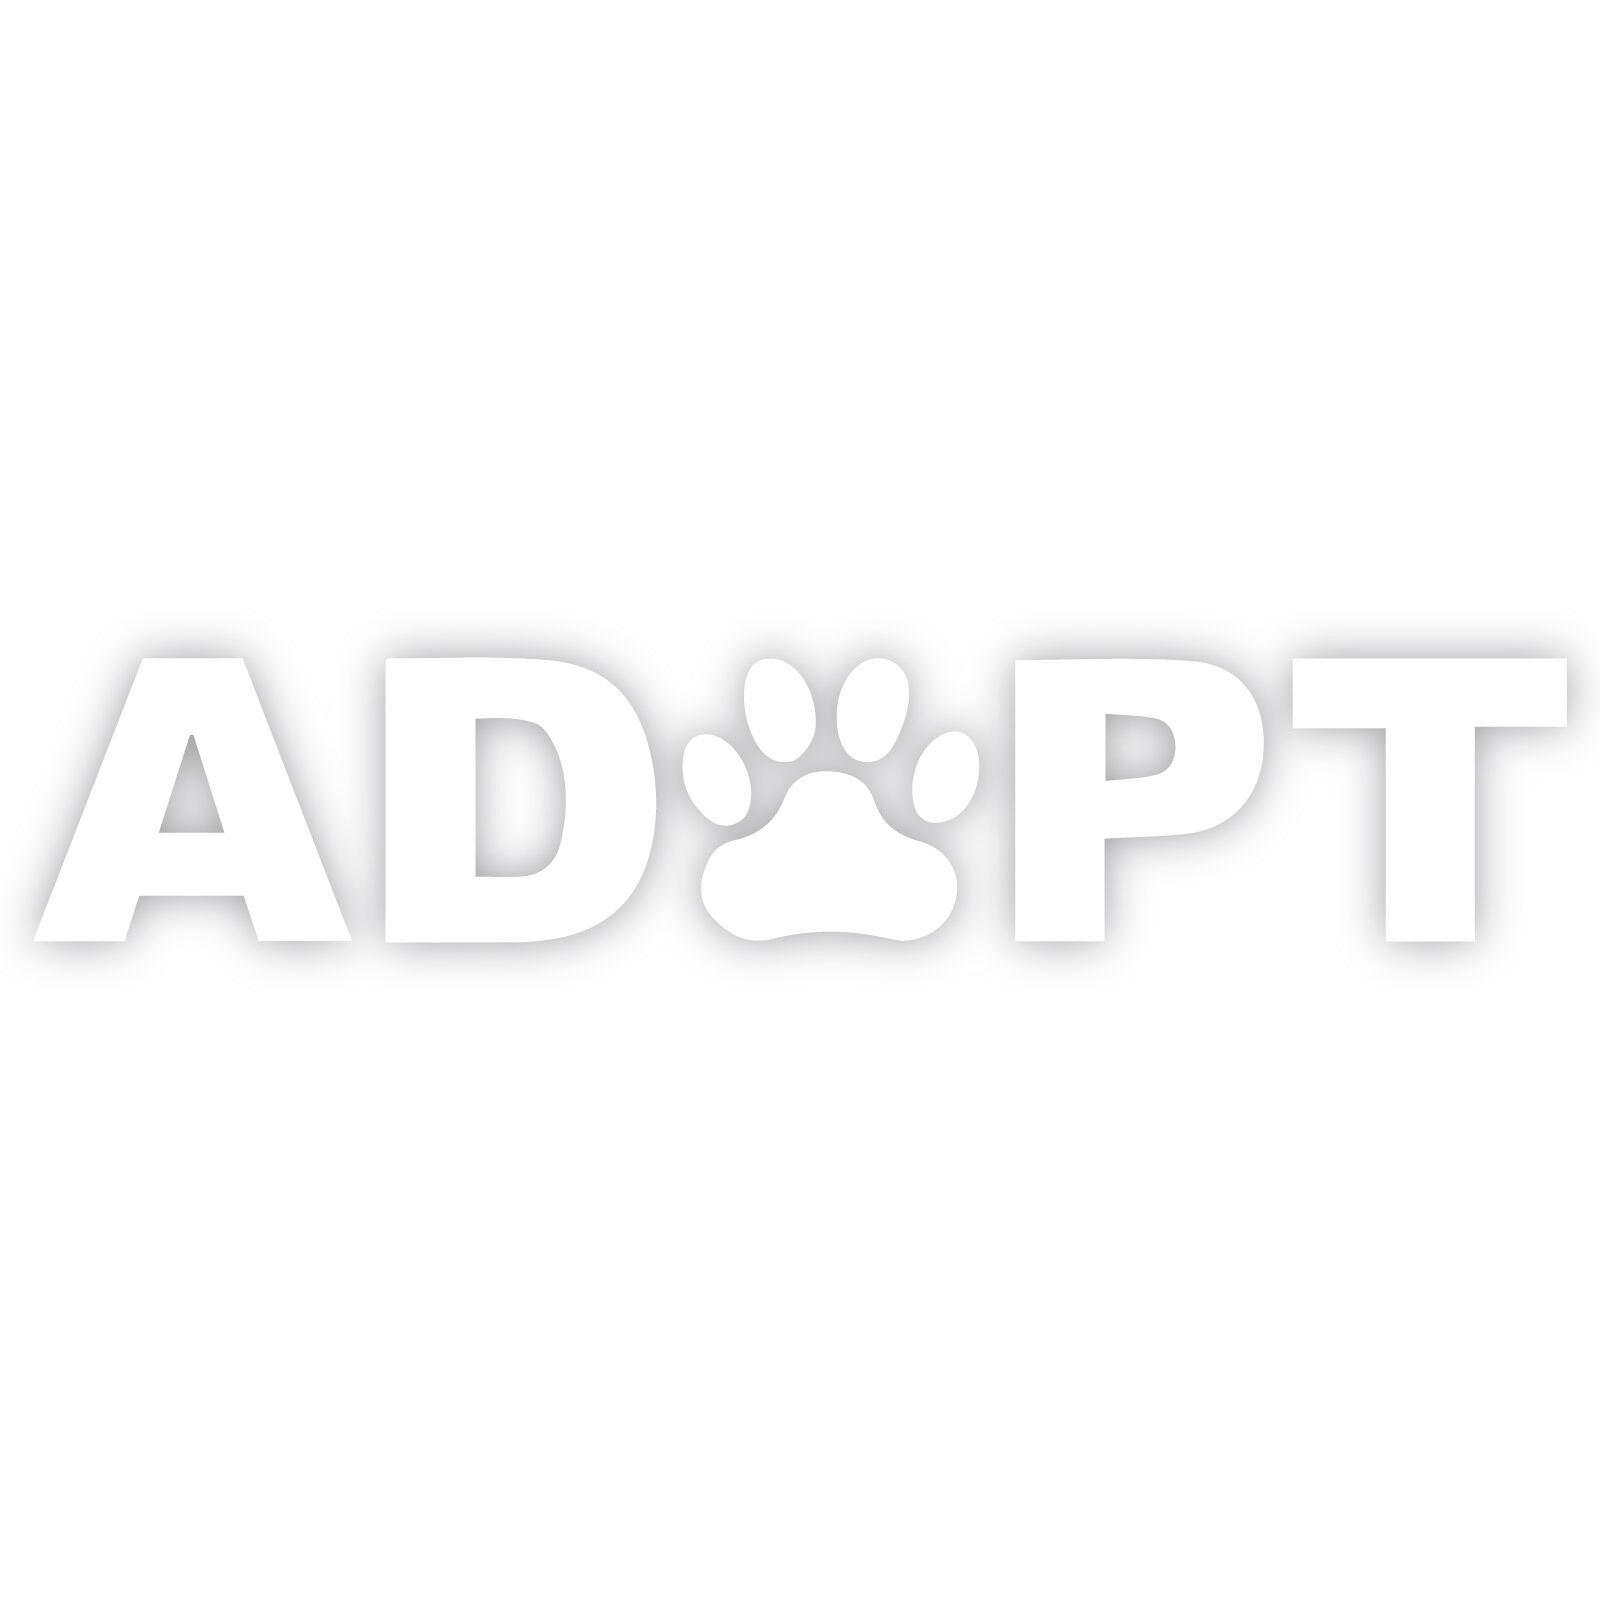  ADOPT A Pet Paw Rescue 12